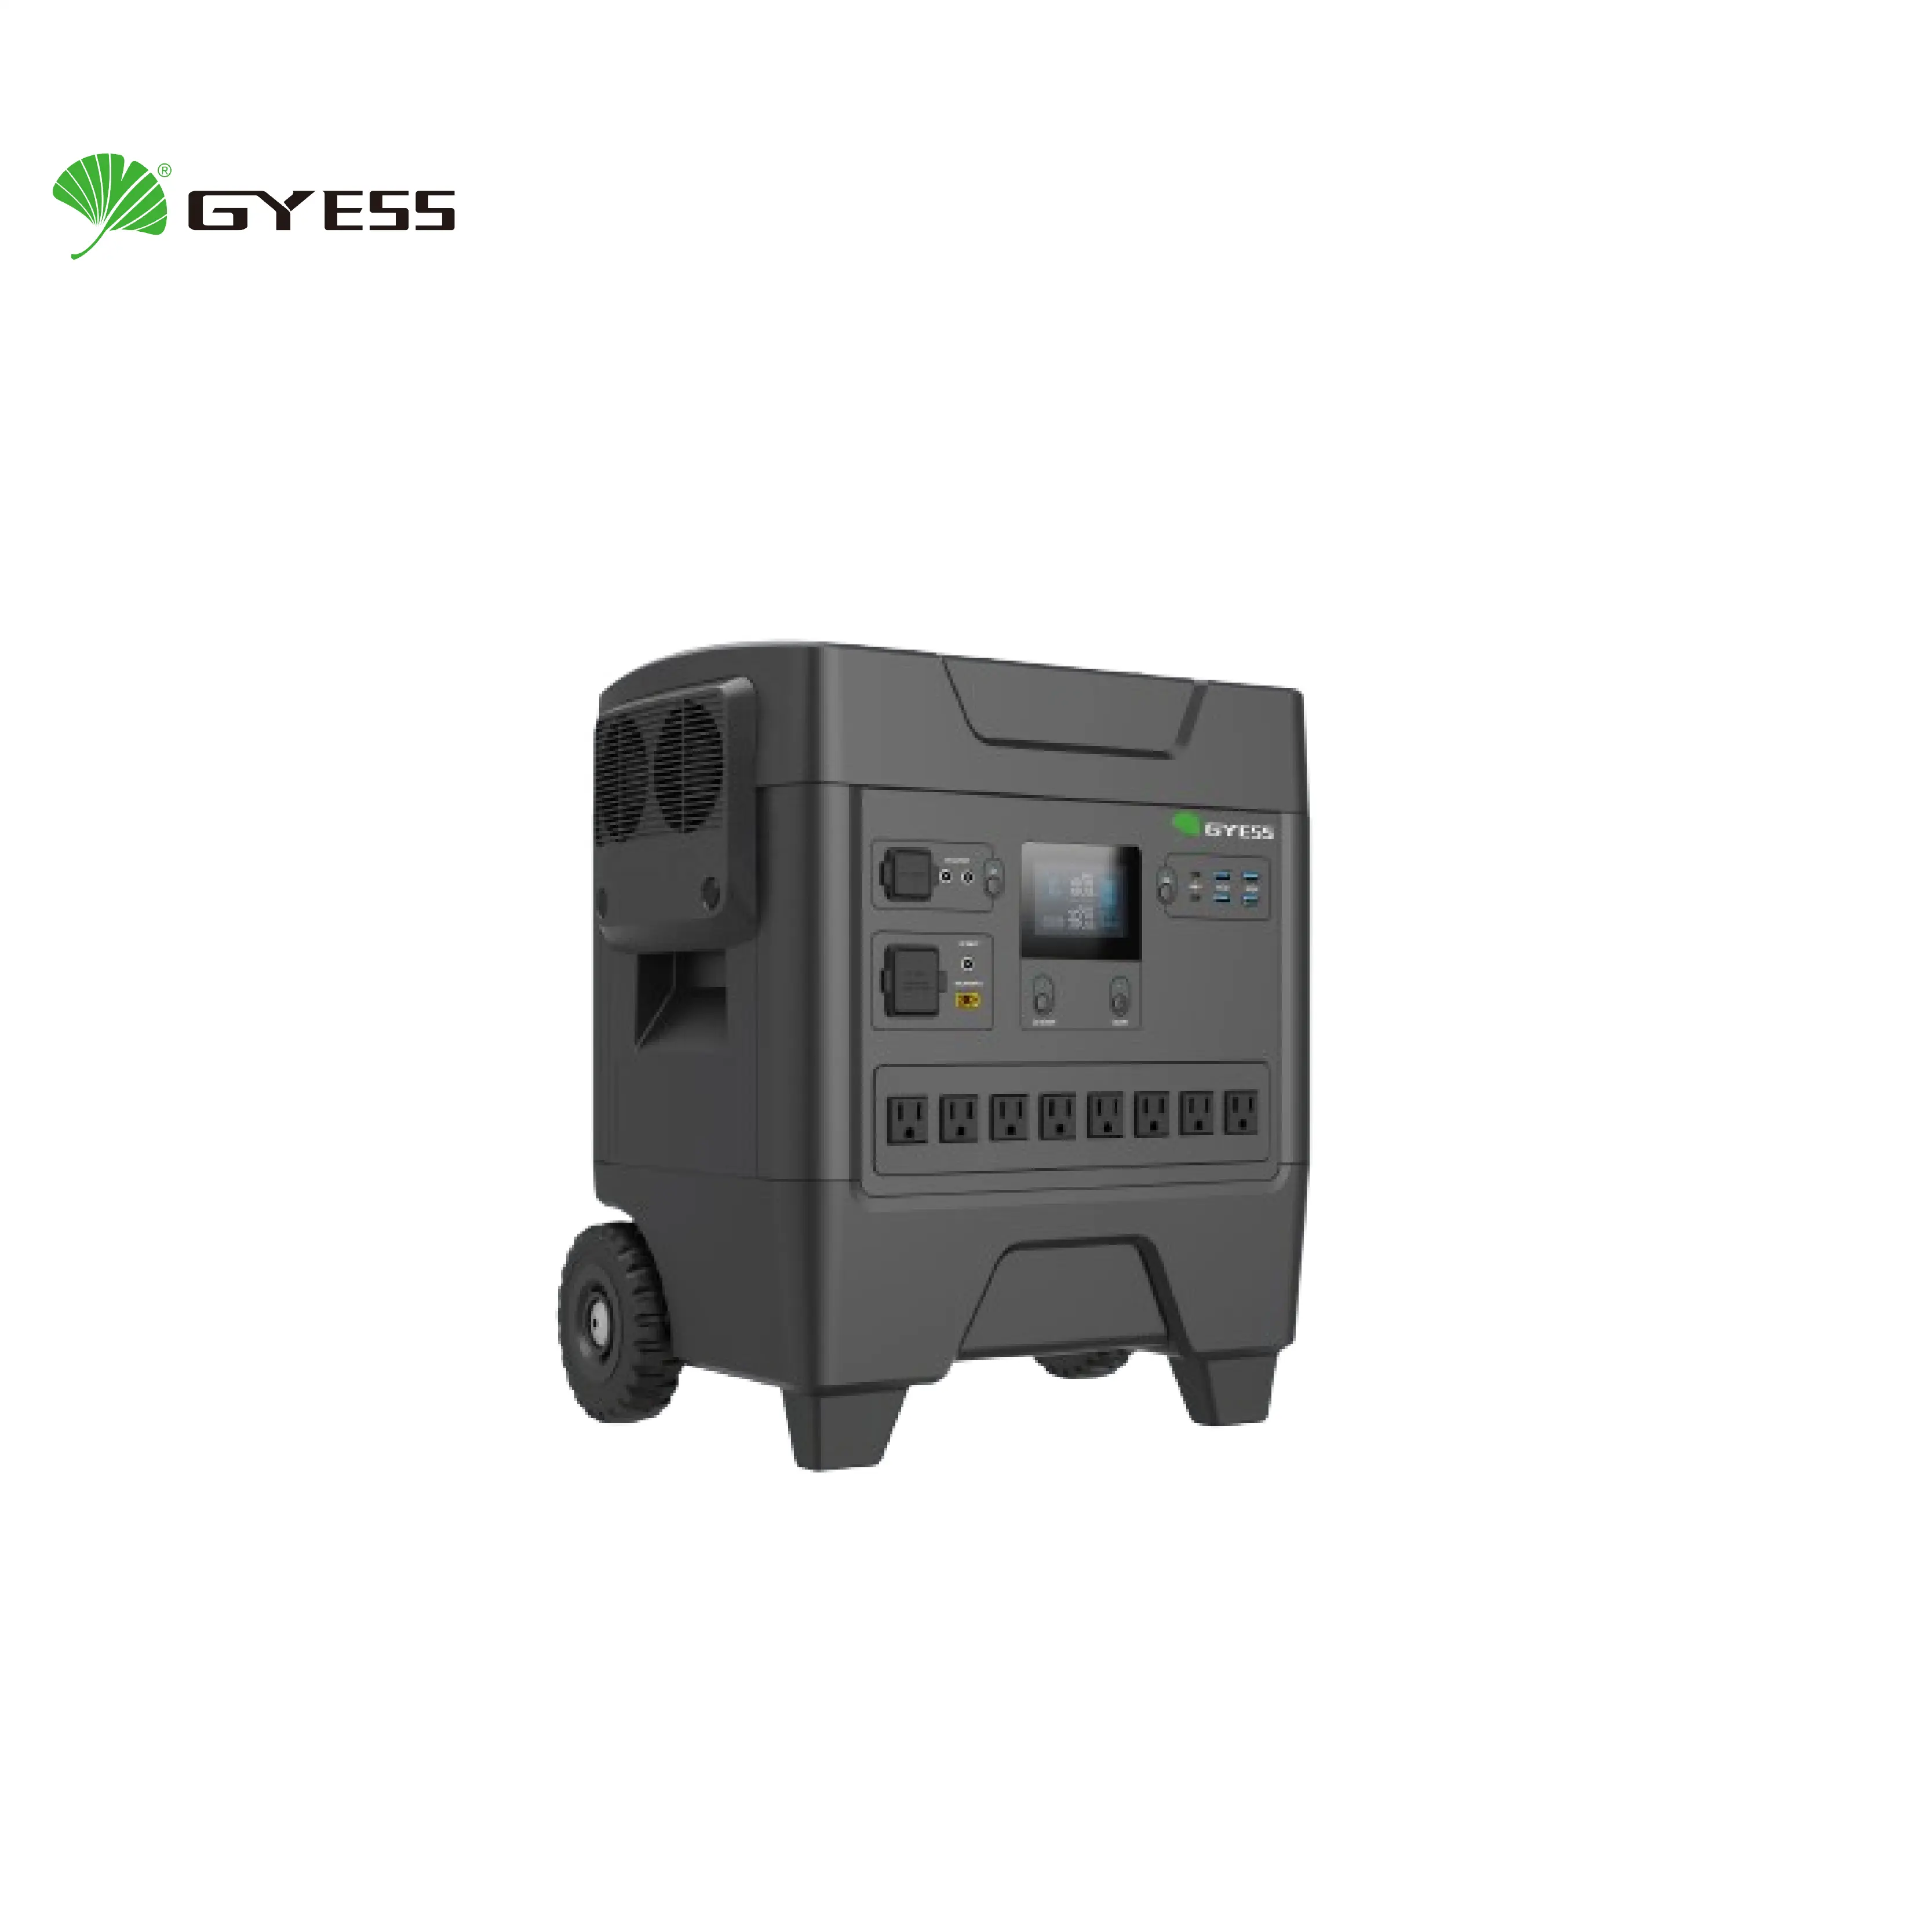 Nuovo design 3600w IP65 impermeabile power bank 36000 mah power bank batteria esterna